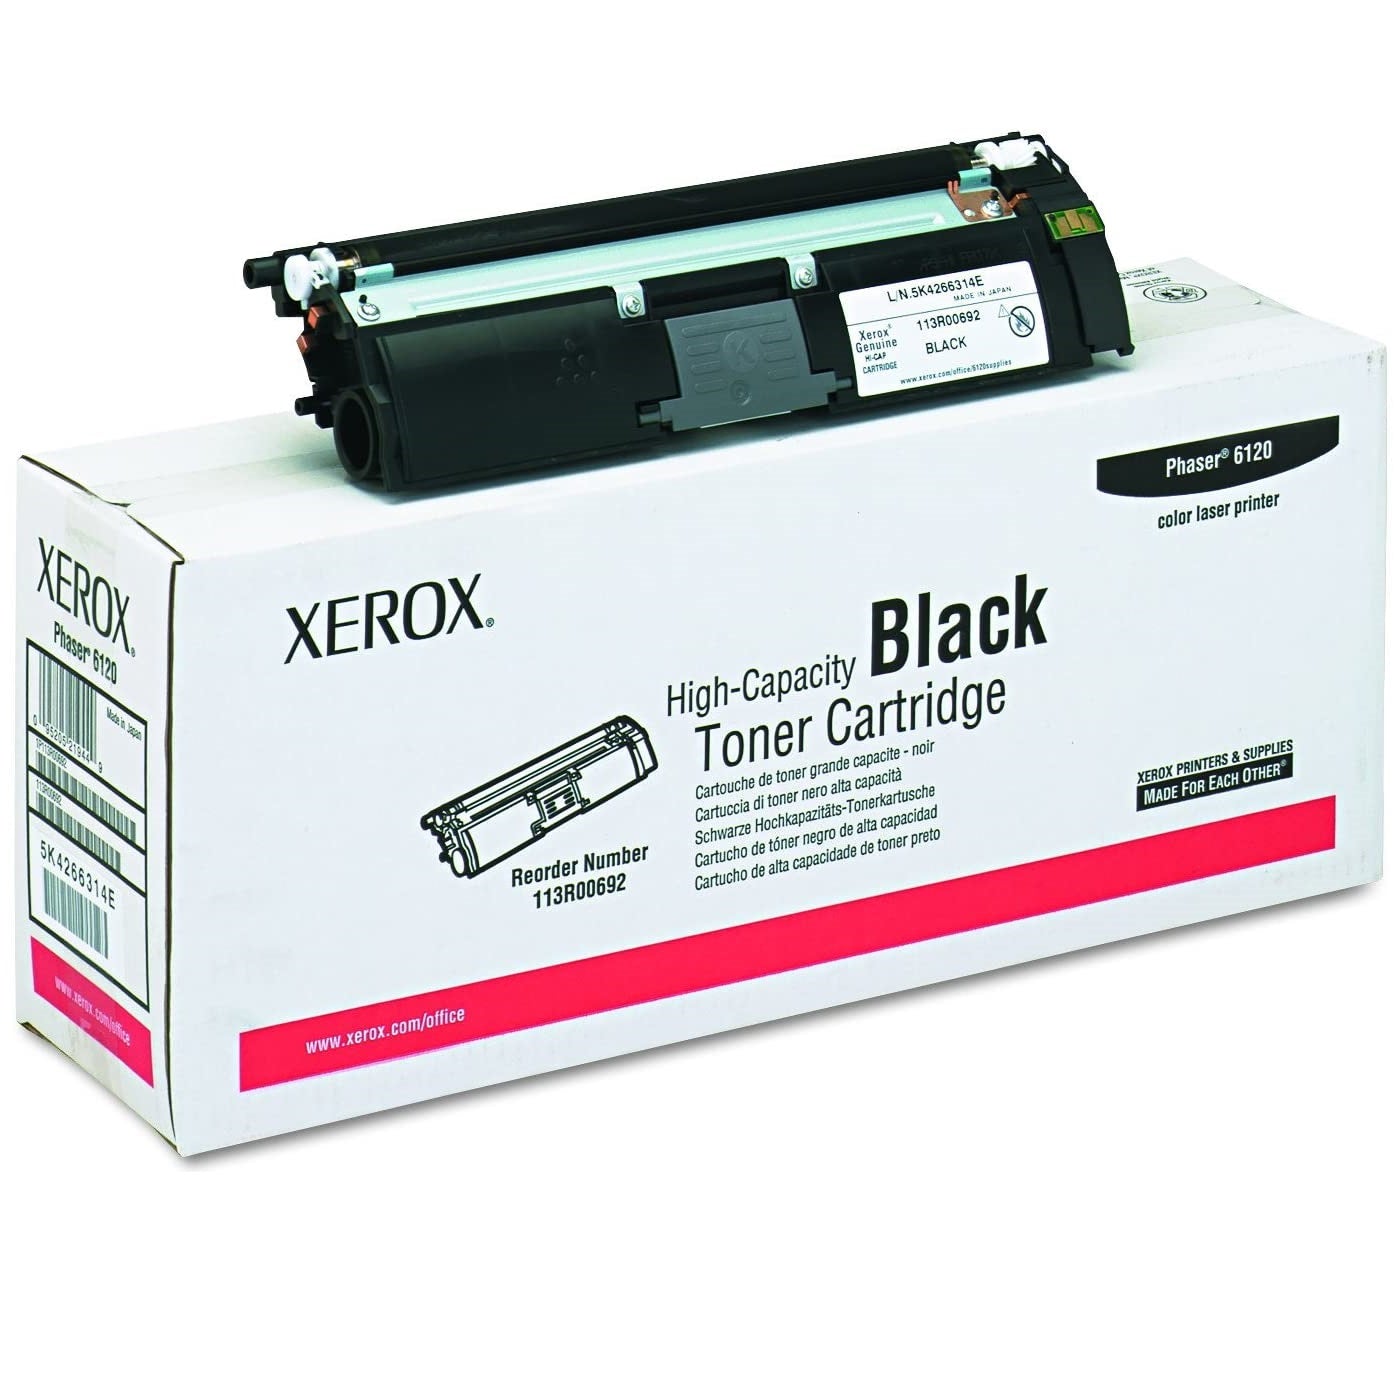 Absolute Toner Xerox 113R00692 Black High Capacity Genuine OEM Toner Cartridge for Phaser 6120/6115MFP Original Xerox Cartridges